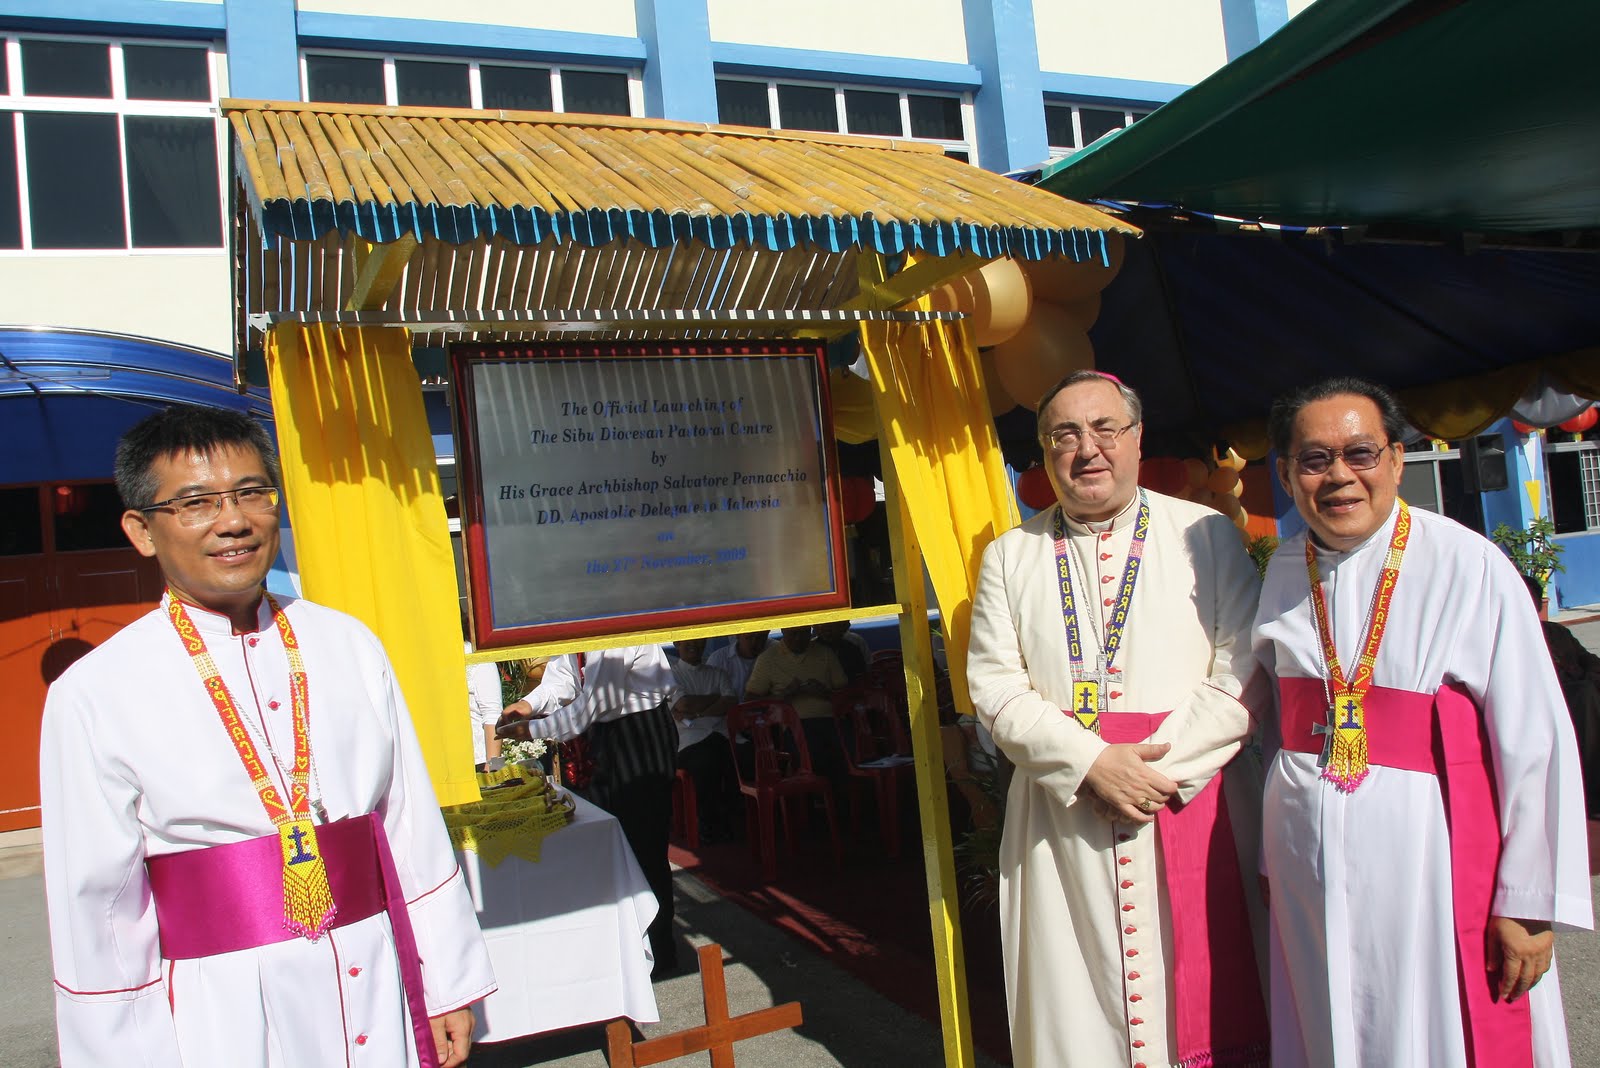 [Launching+of+Sibu+Diocesan+Pastoral+Centre+by+Apostalic+Delegate+Salvotore+Pennachio.JPG]